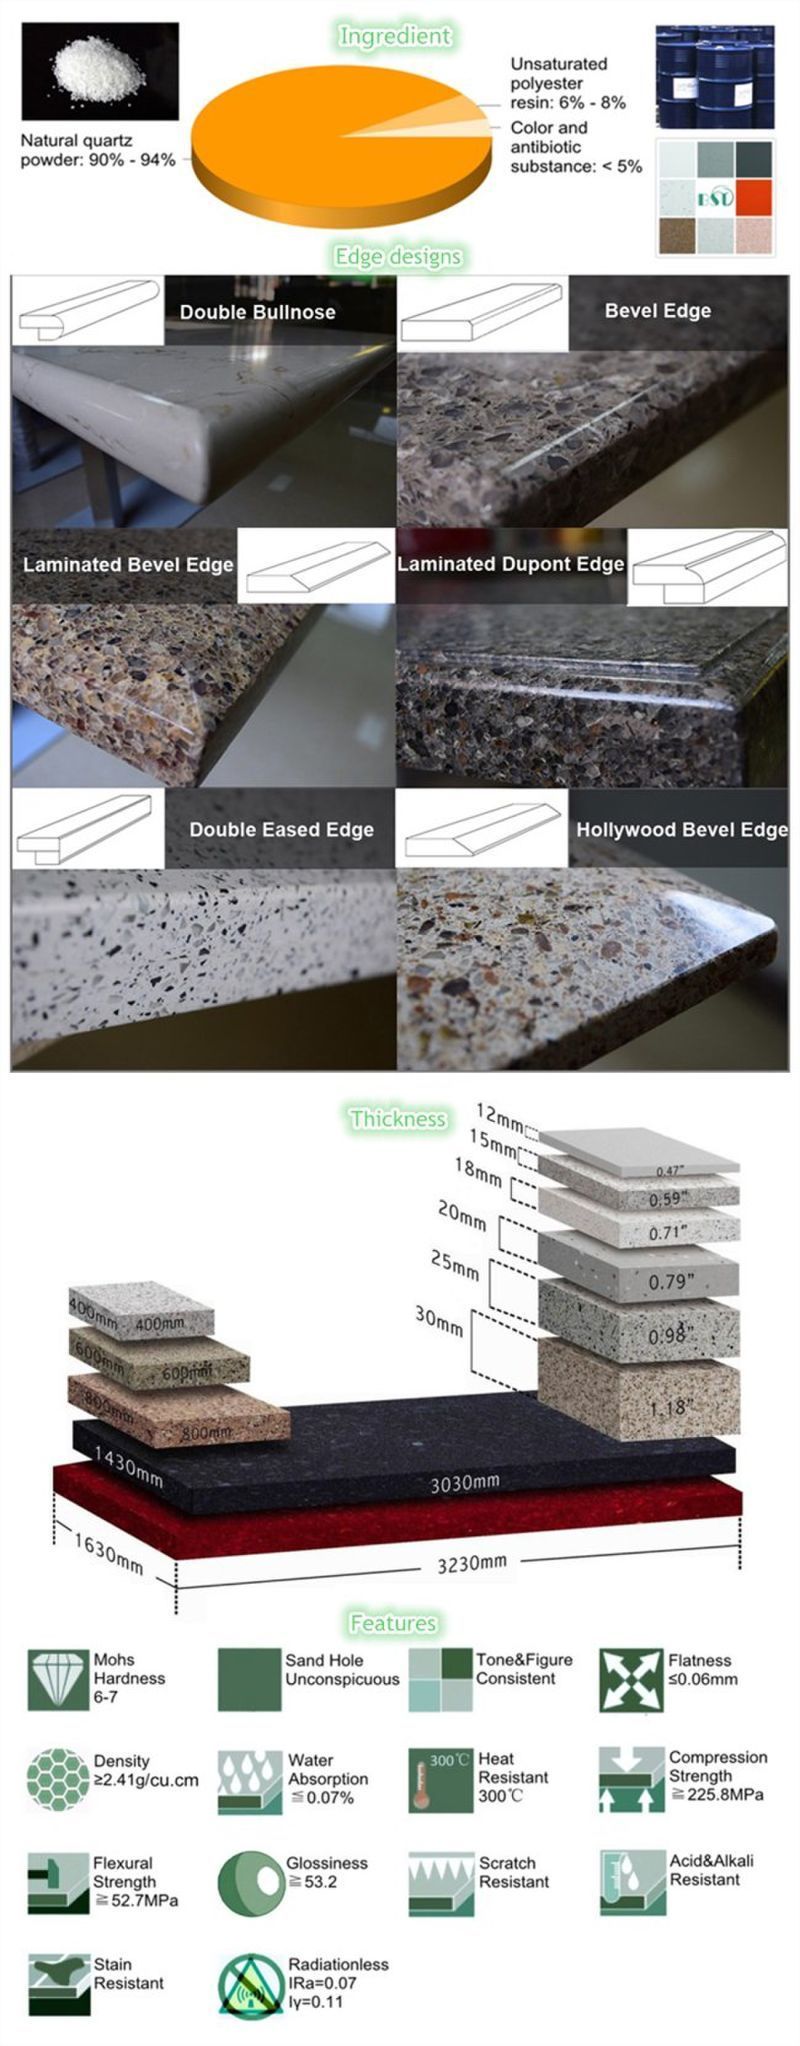 New Granite Look Wholesale Quartz Slabs for Vanity Top Table Top Counter Top